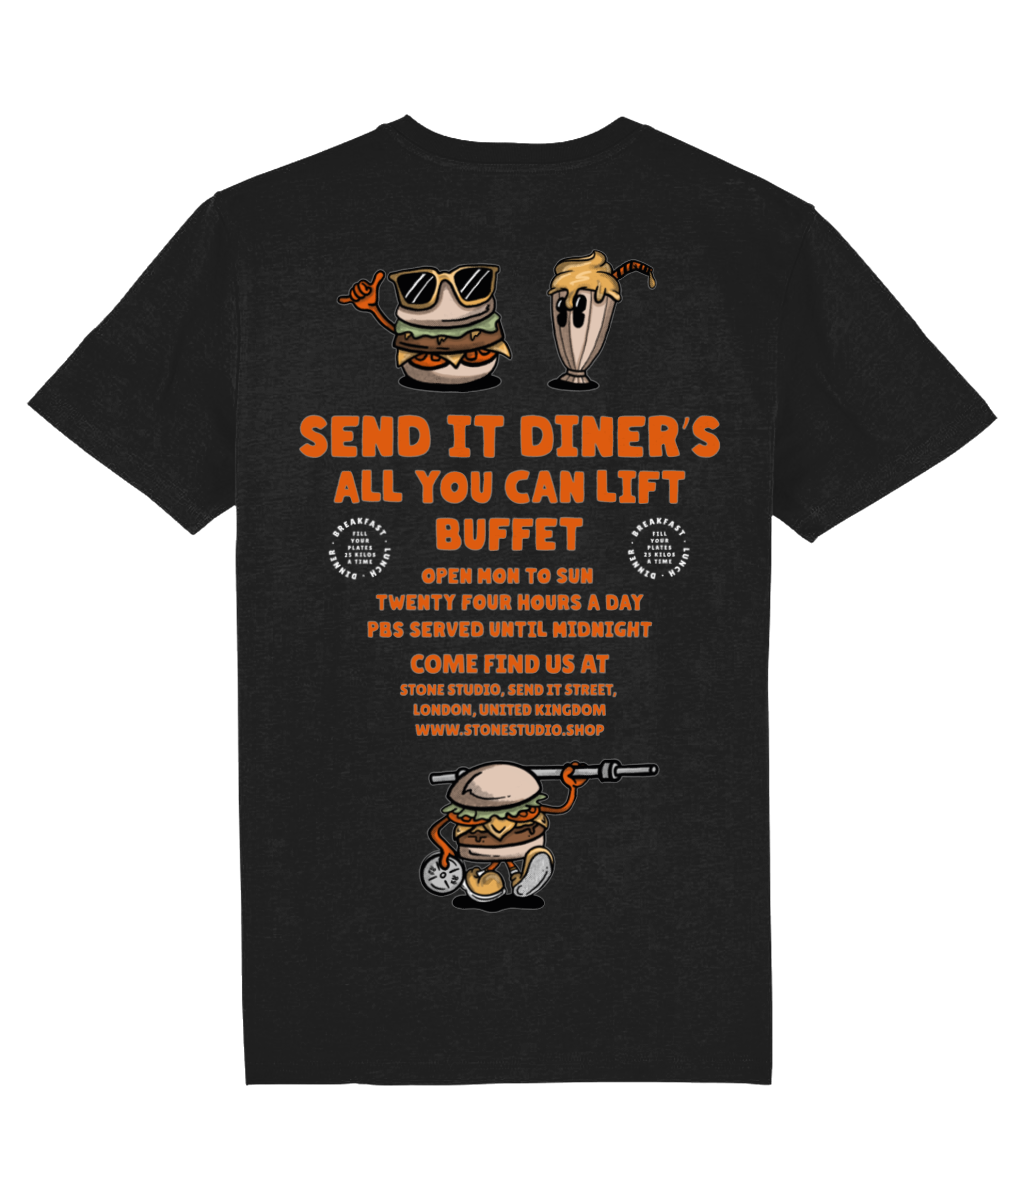 Send it diner t-shirt